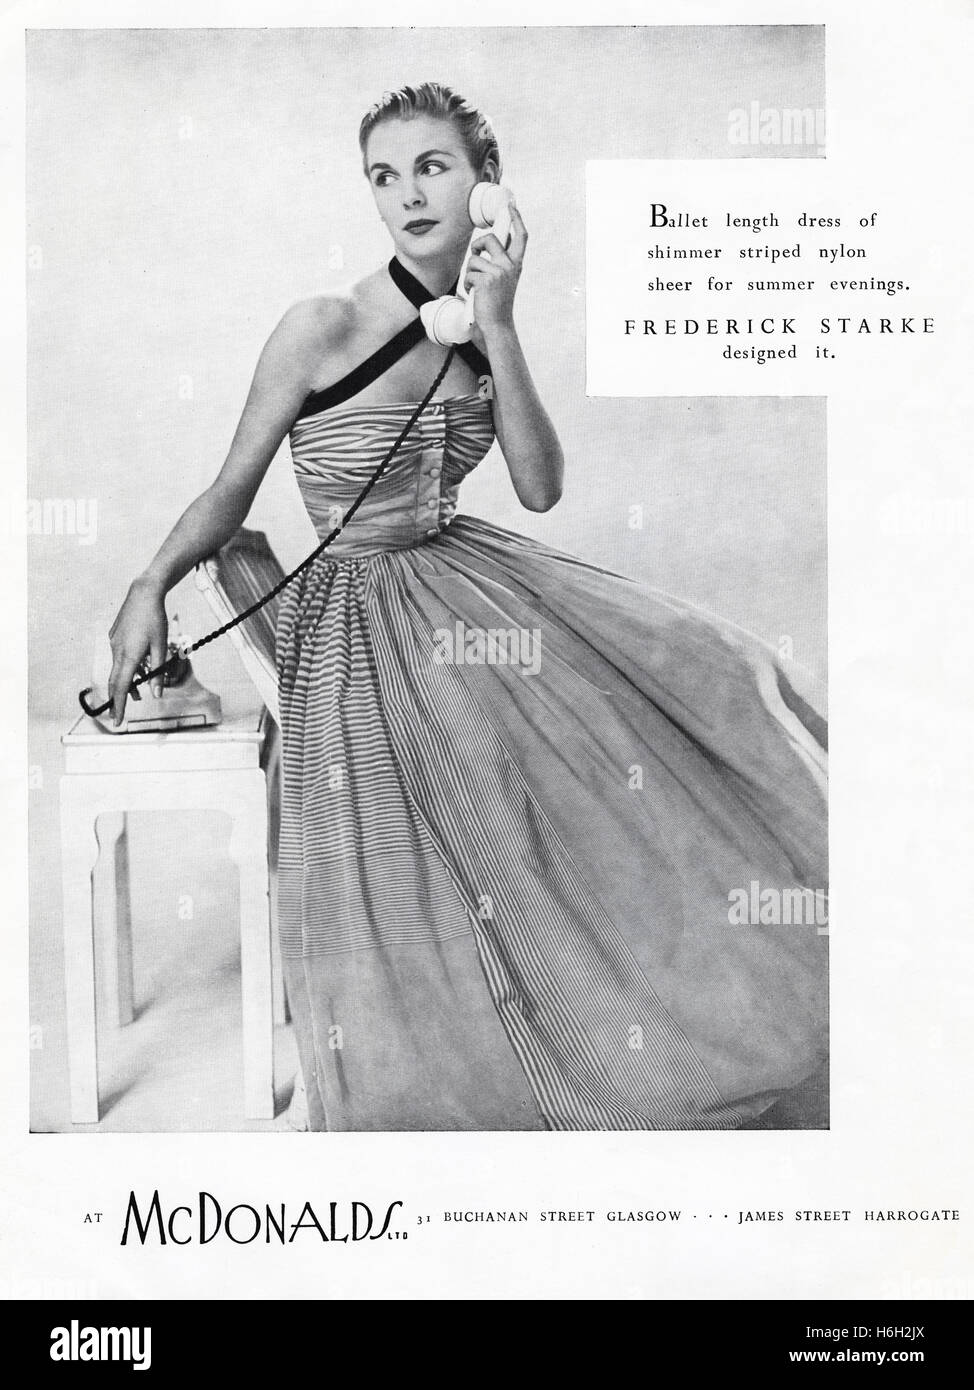 1962 woman in sparkling blue dress photo Maidenform girdle vintage print ad